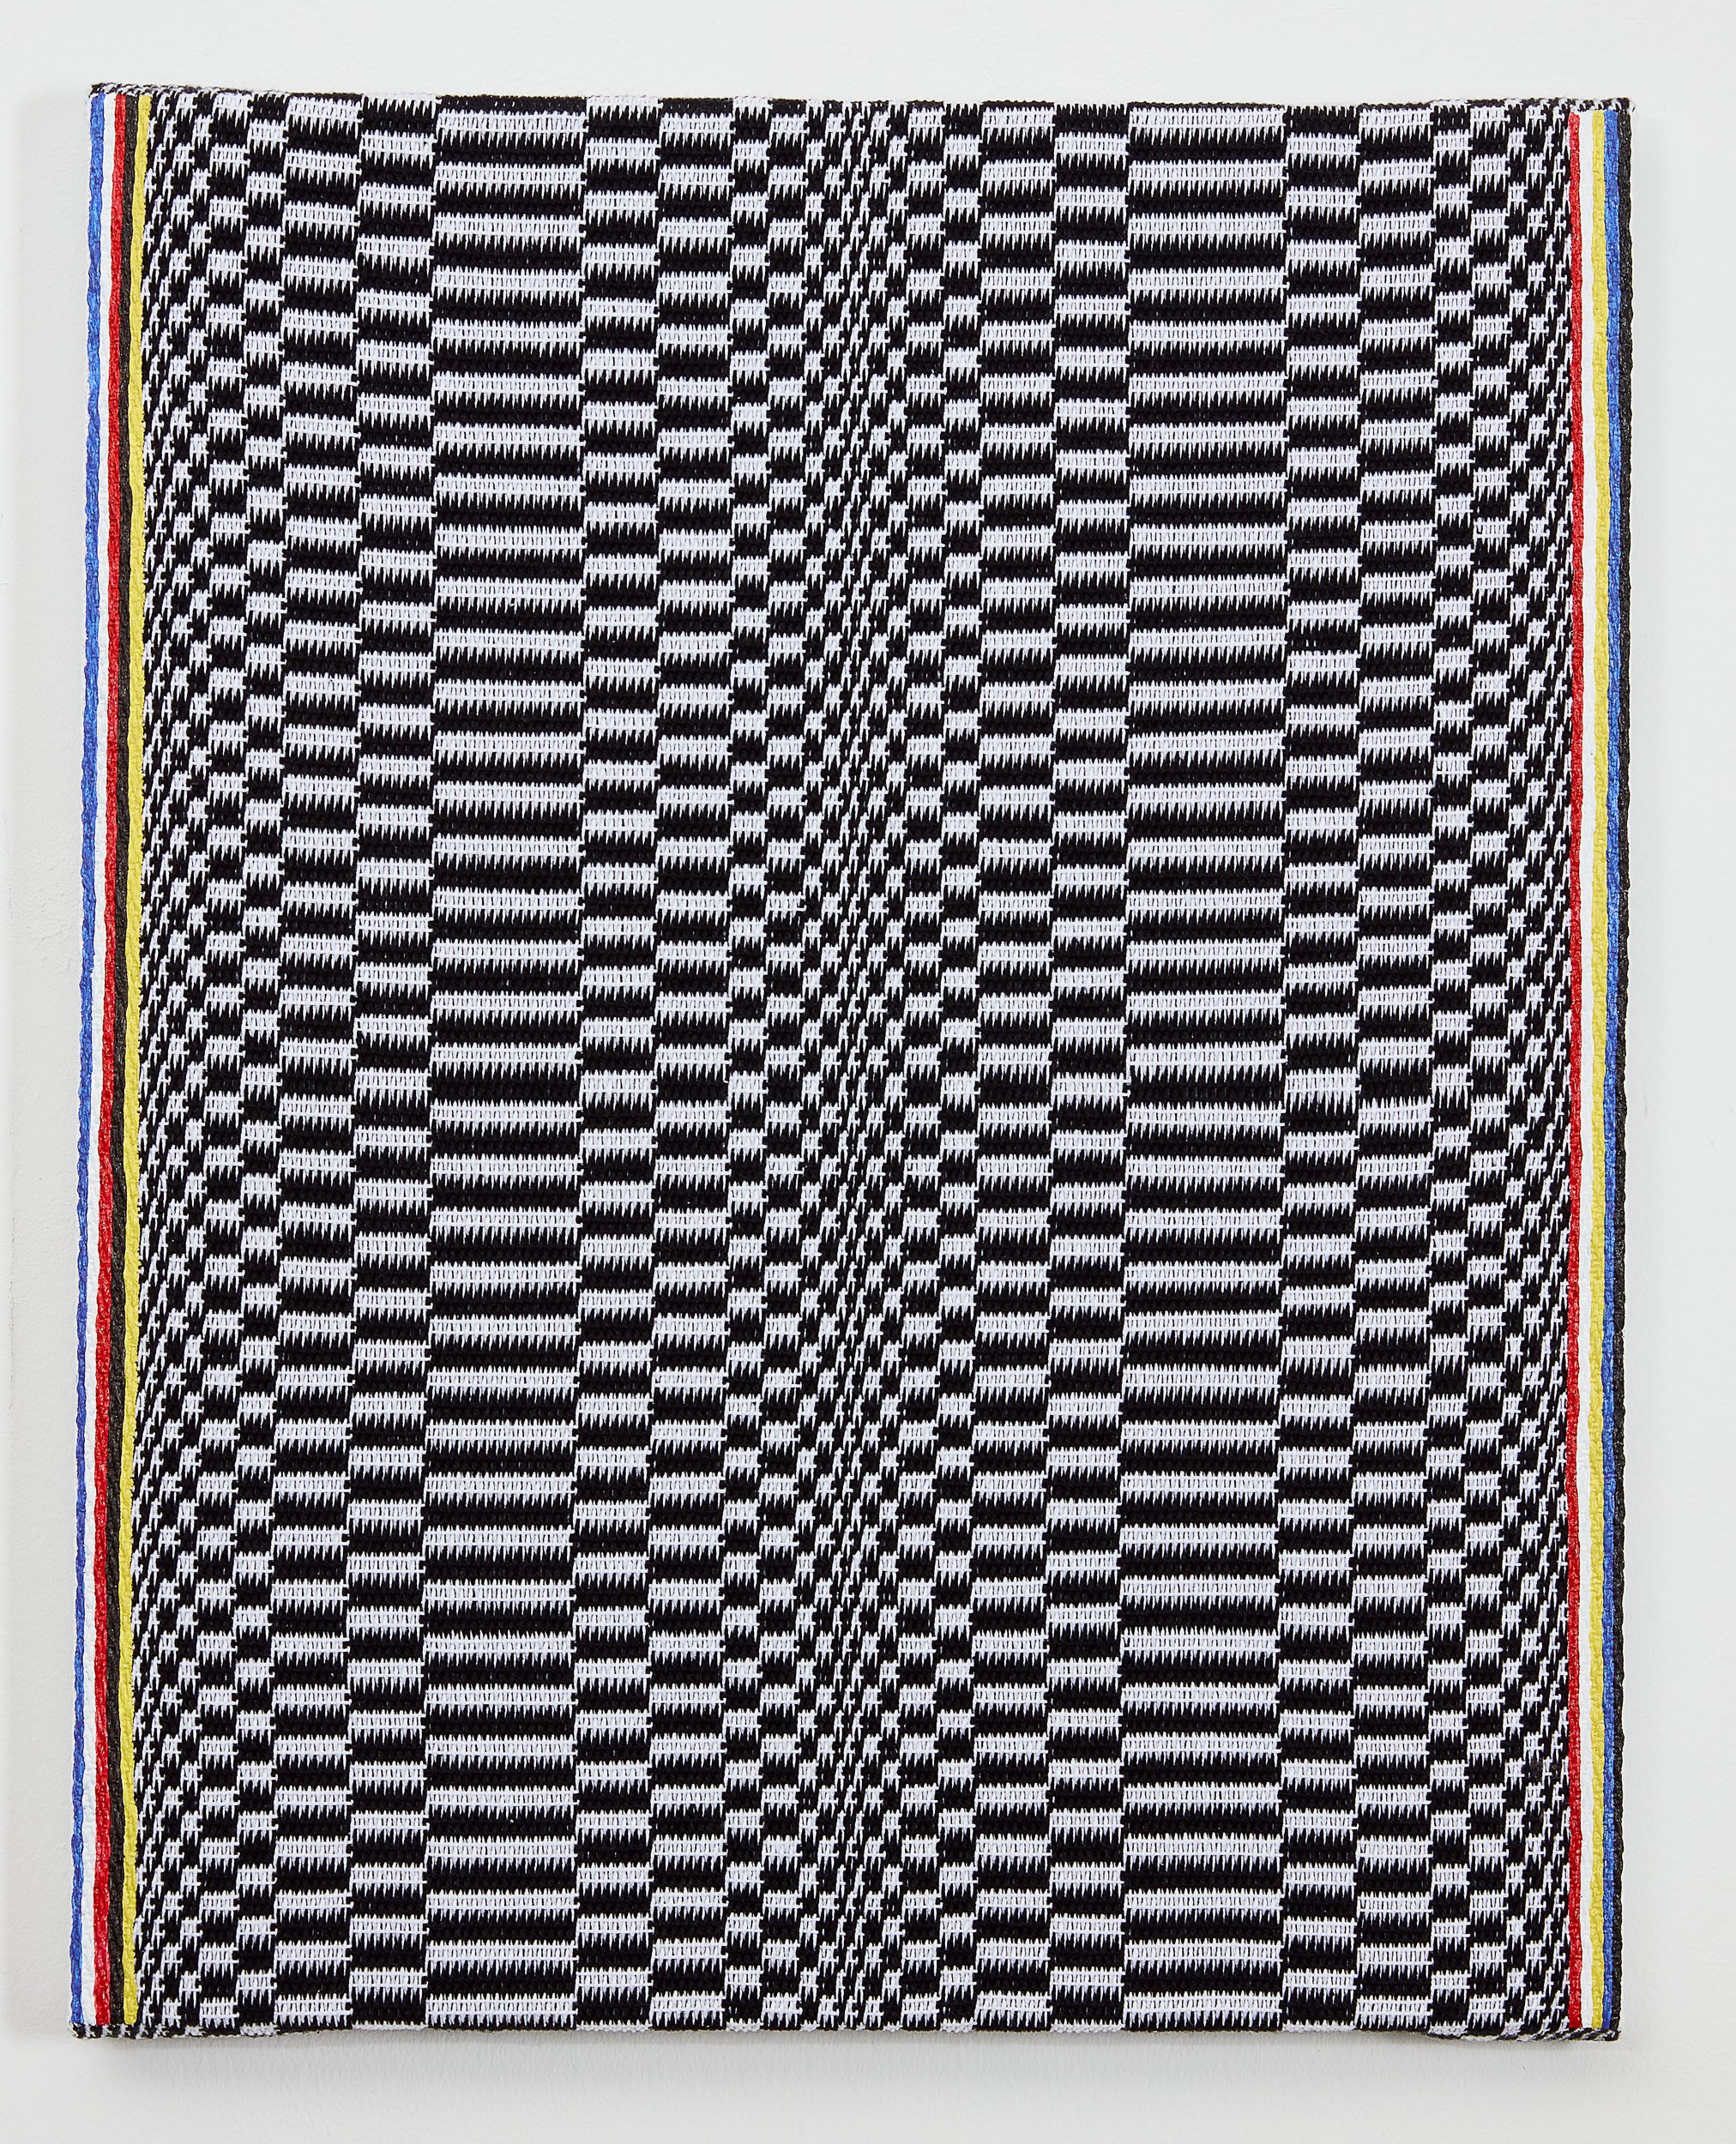 Samantha Bittman, Untitled, 2020, acrylic on hand-woven textile, 20 x 16 in, 50.8 x 40.6 cm, (SBi302533) LR